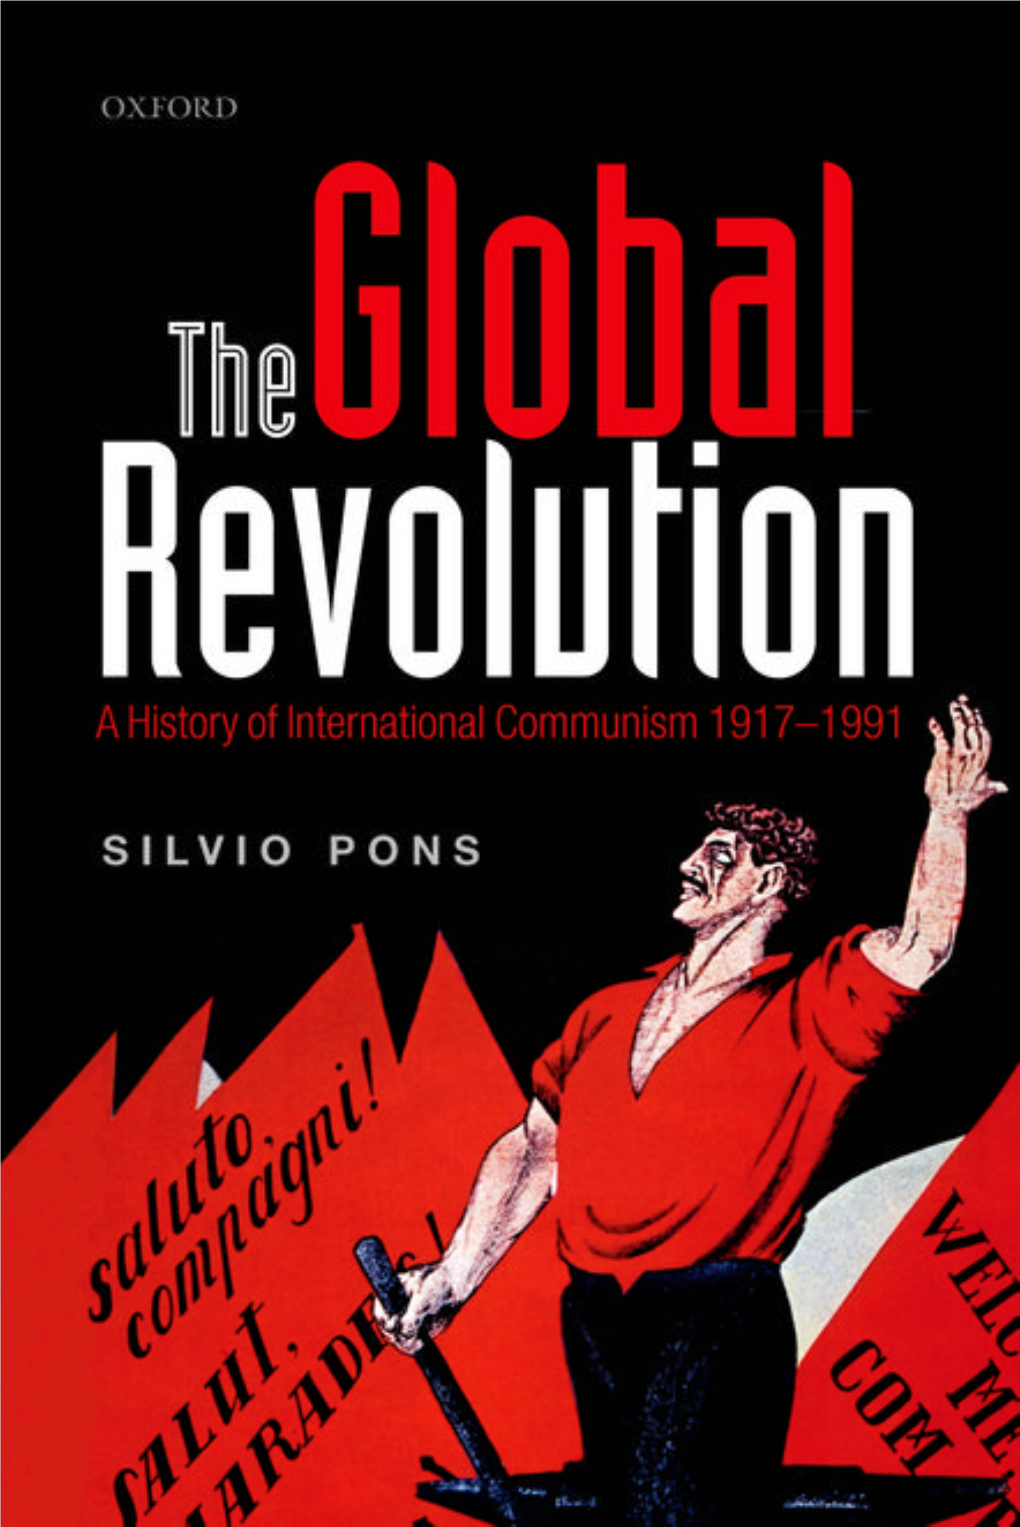 A History of International Communism 1917-1991